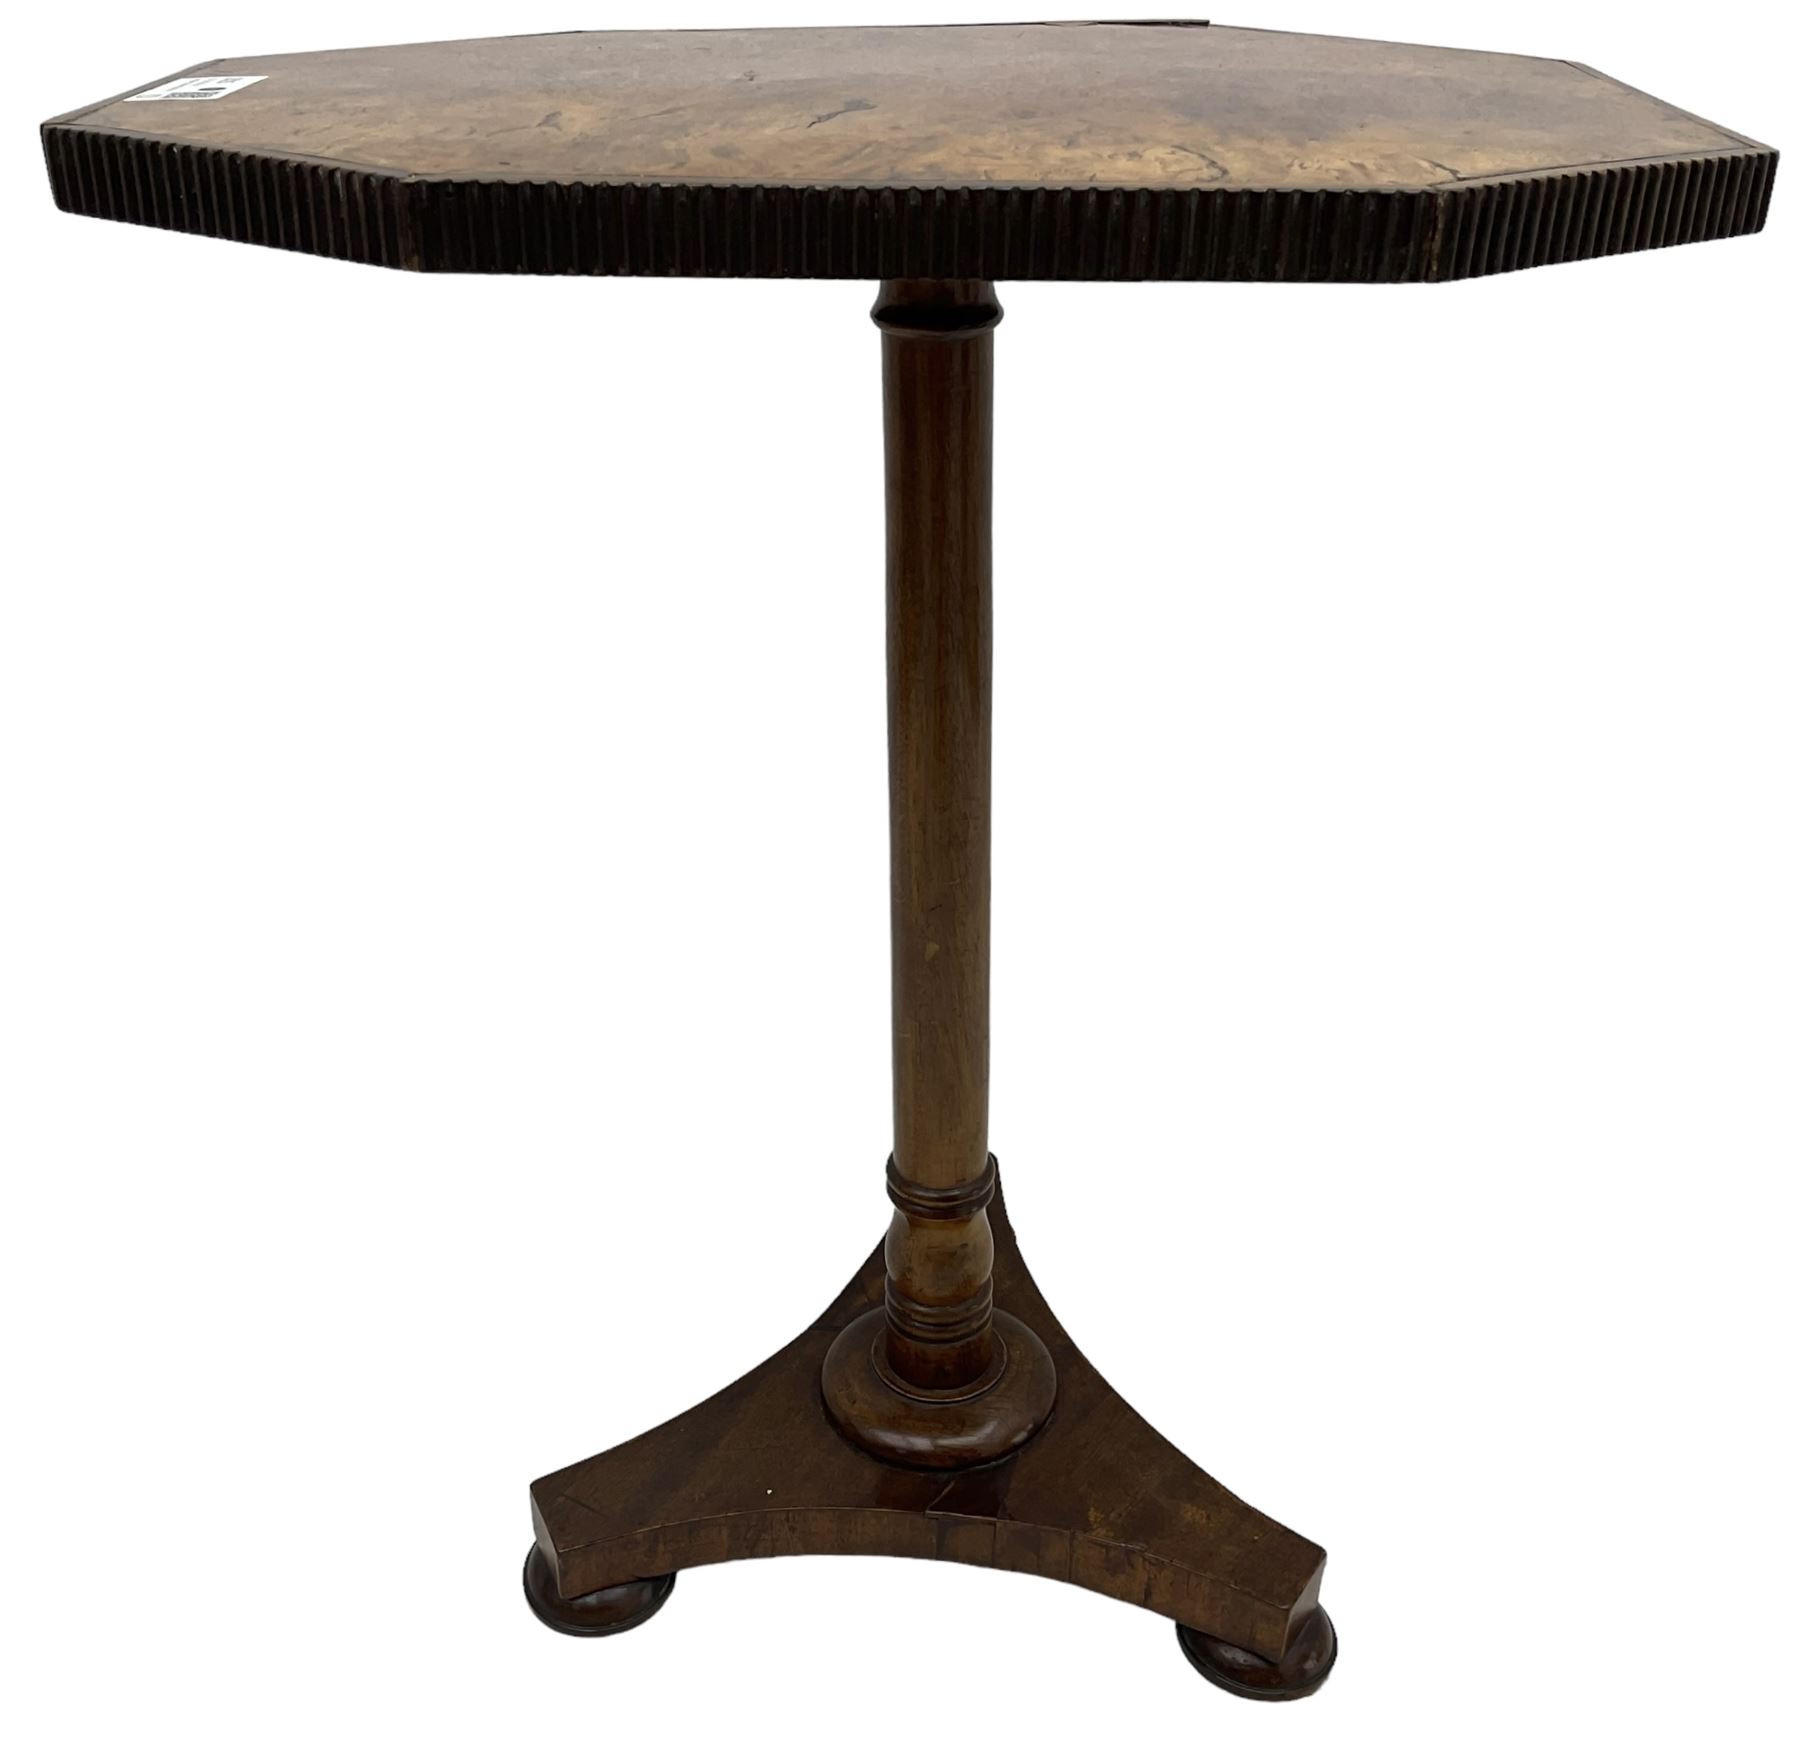 Simkin of London - 19th century figured walnut and mahogany occasional table